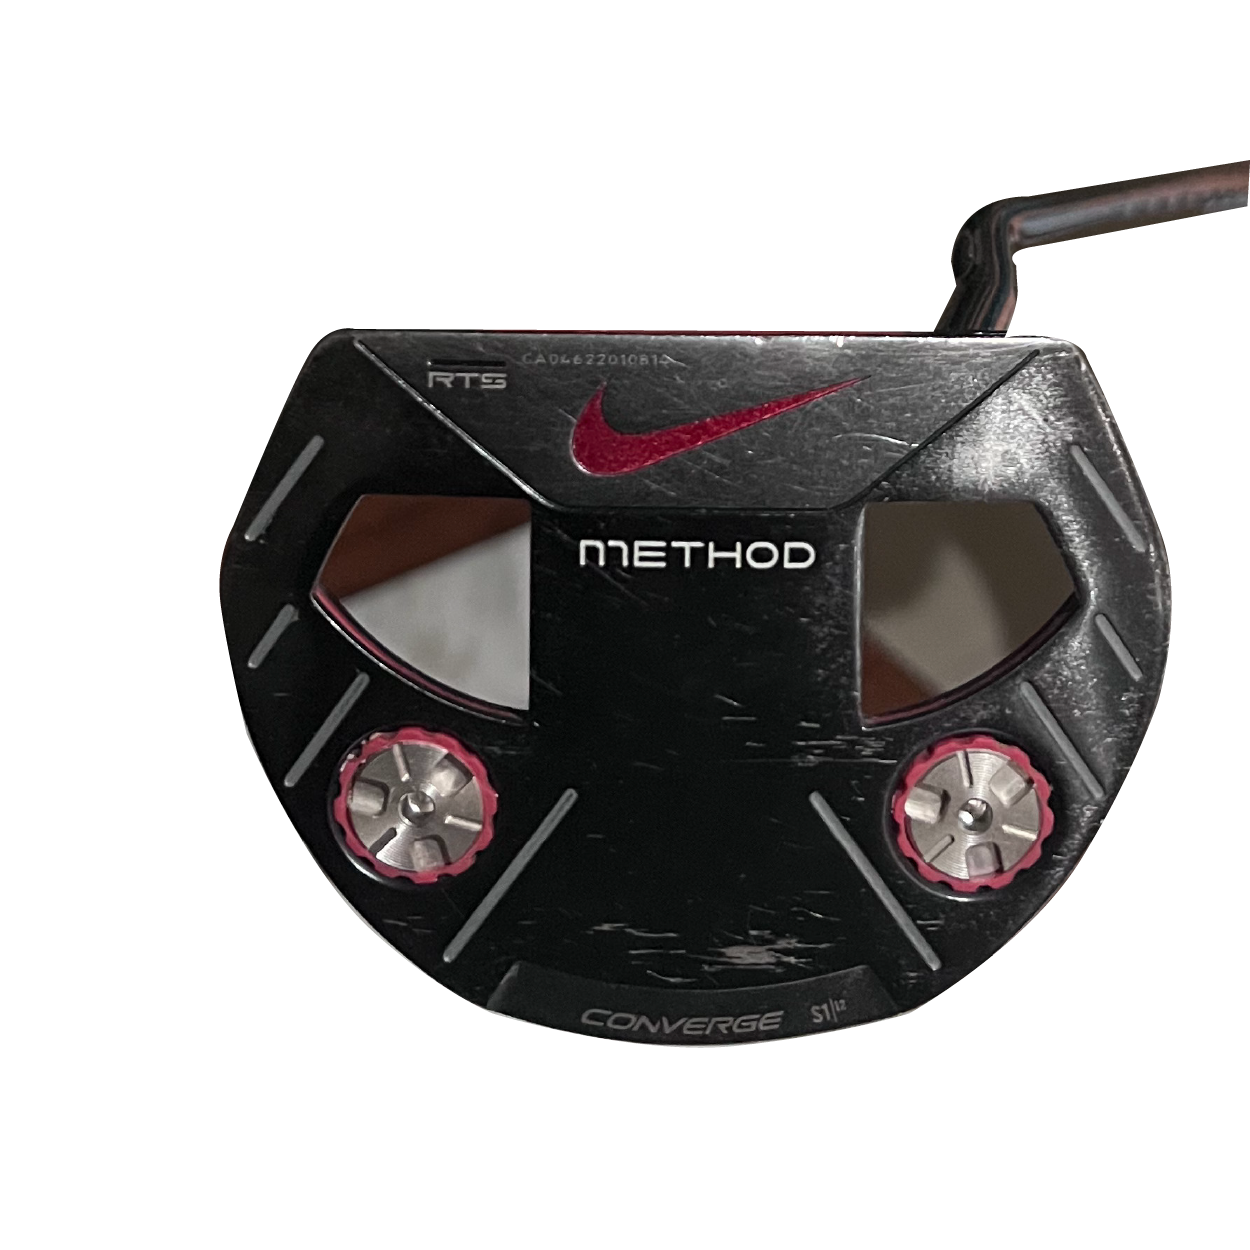 Nike - Method Converge S1 12 - 38"